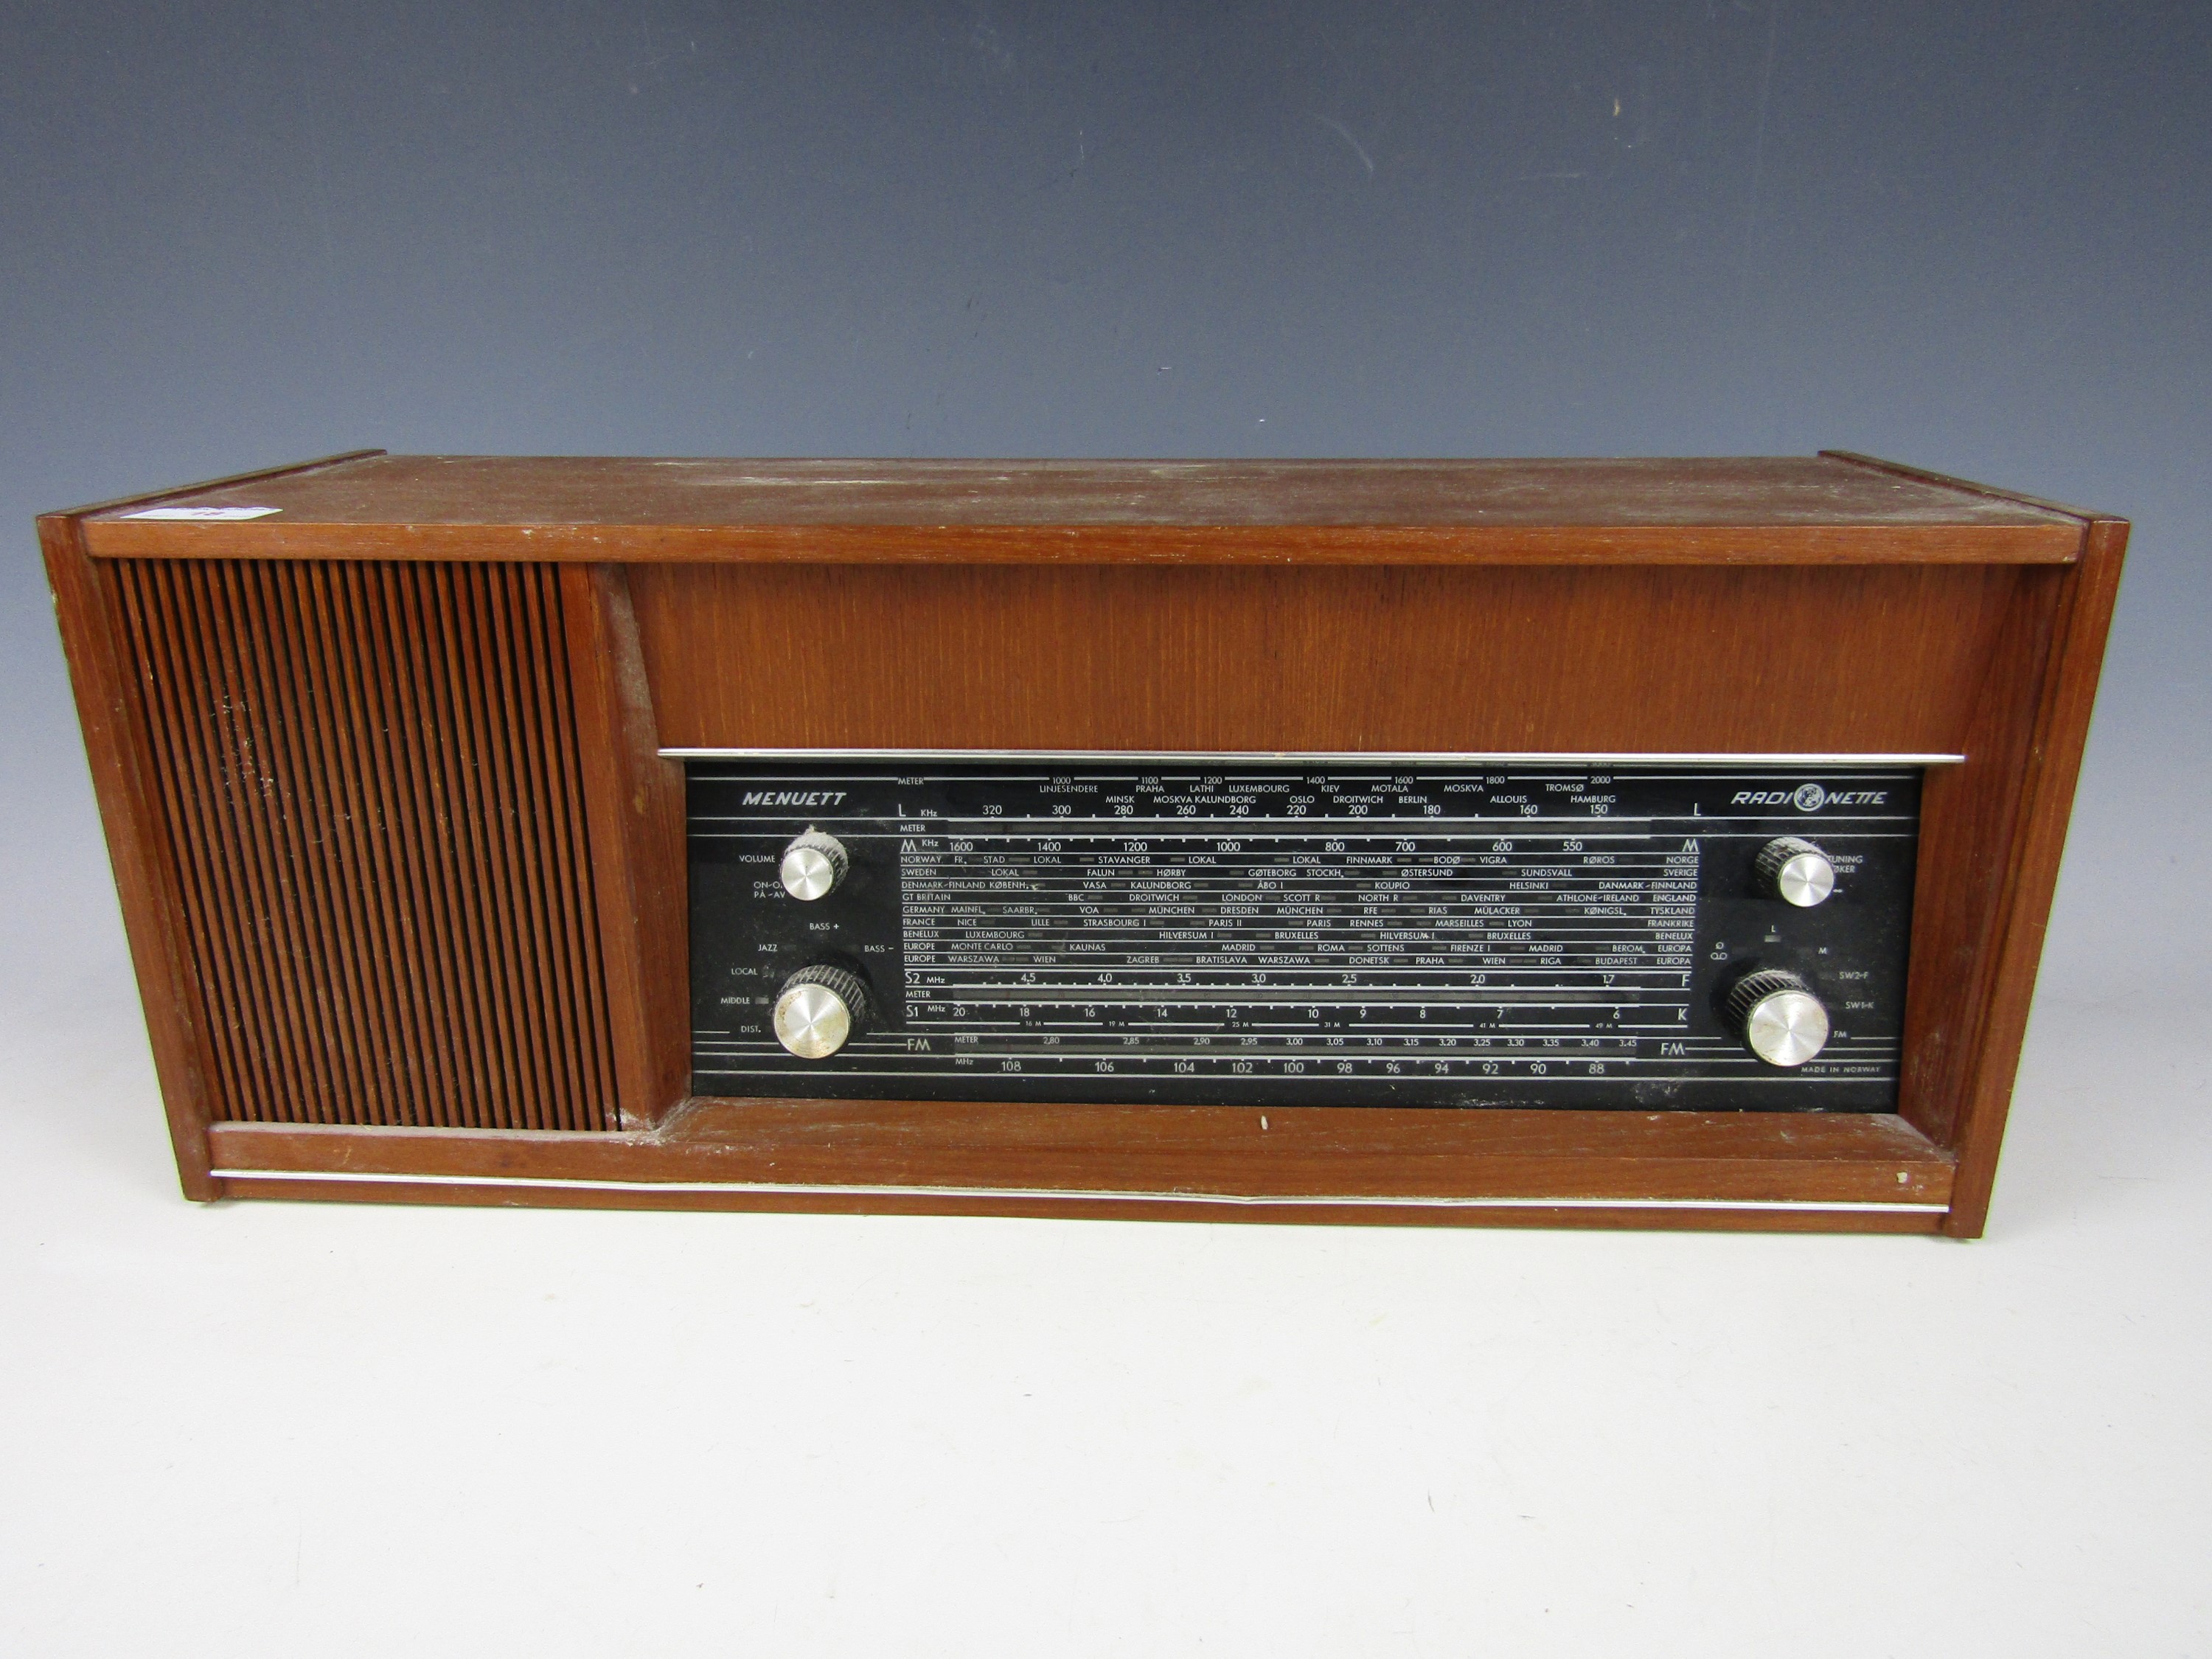 A vintage Norwegian Menuett radio